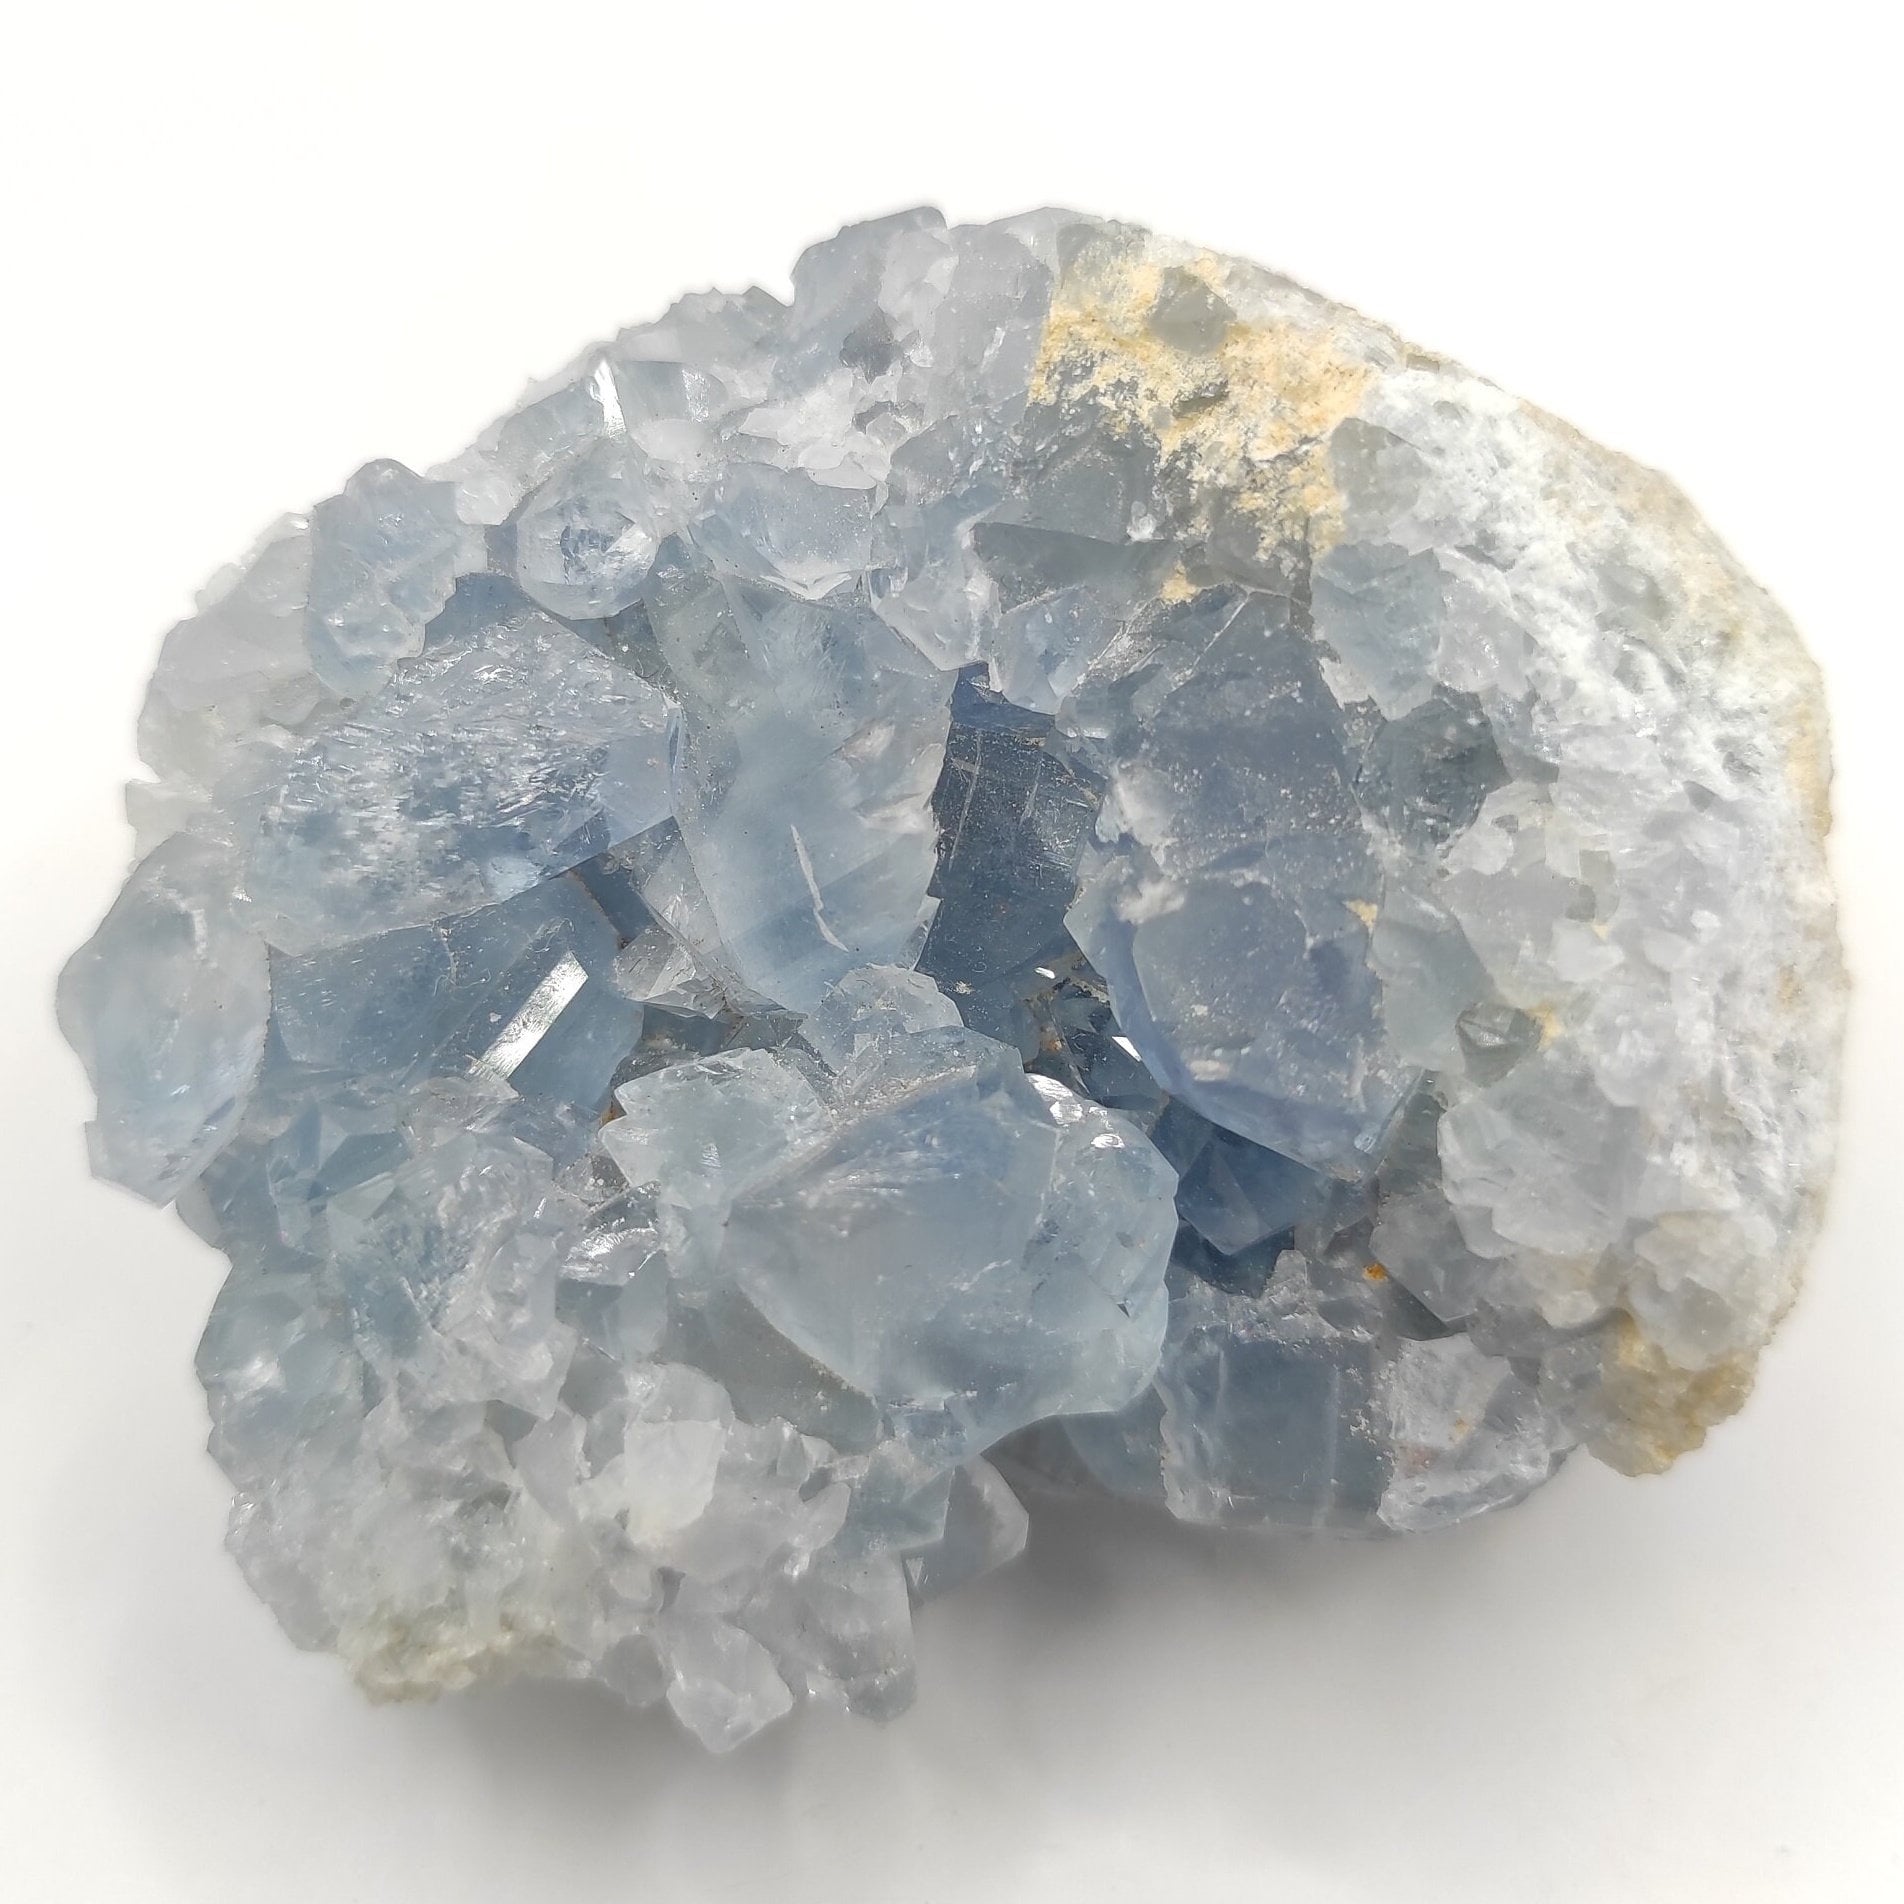 325g Blue Celestite Crystal - Mahajanga, Boeny, Madagascar - Natural Blue Celeste - Mineral Specimen - Crystal Cluster - Raw Blue Crystals